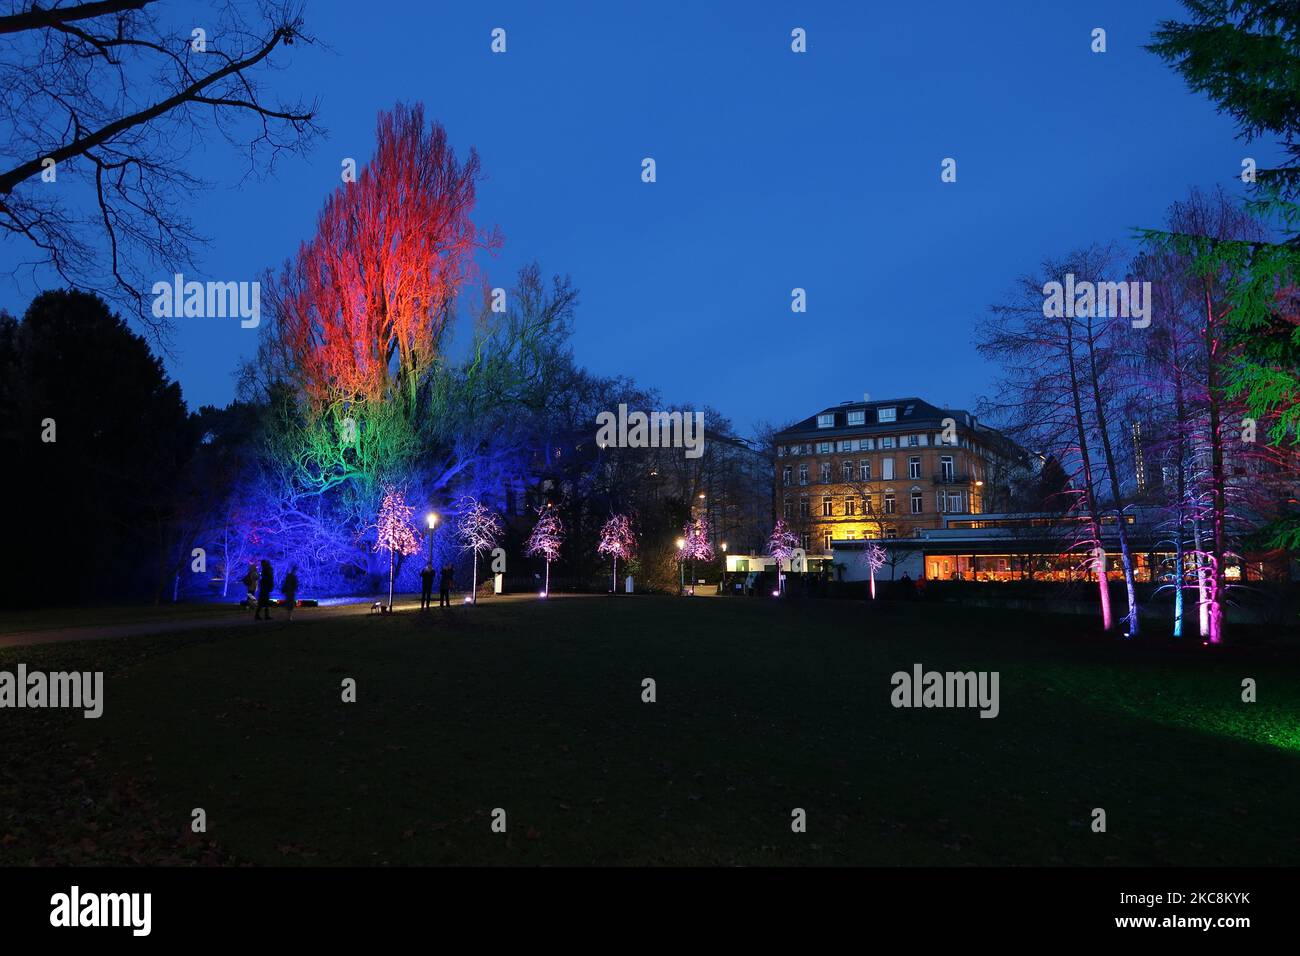 The illuminated festive Christmas lights in the palm garden in Frankfurt, Germany Stock Photo